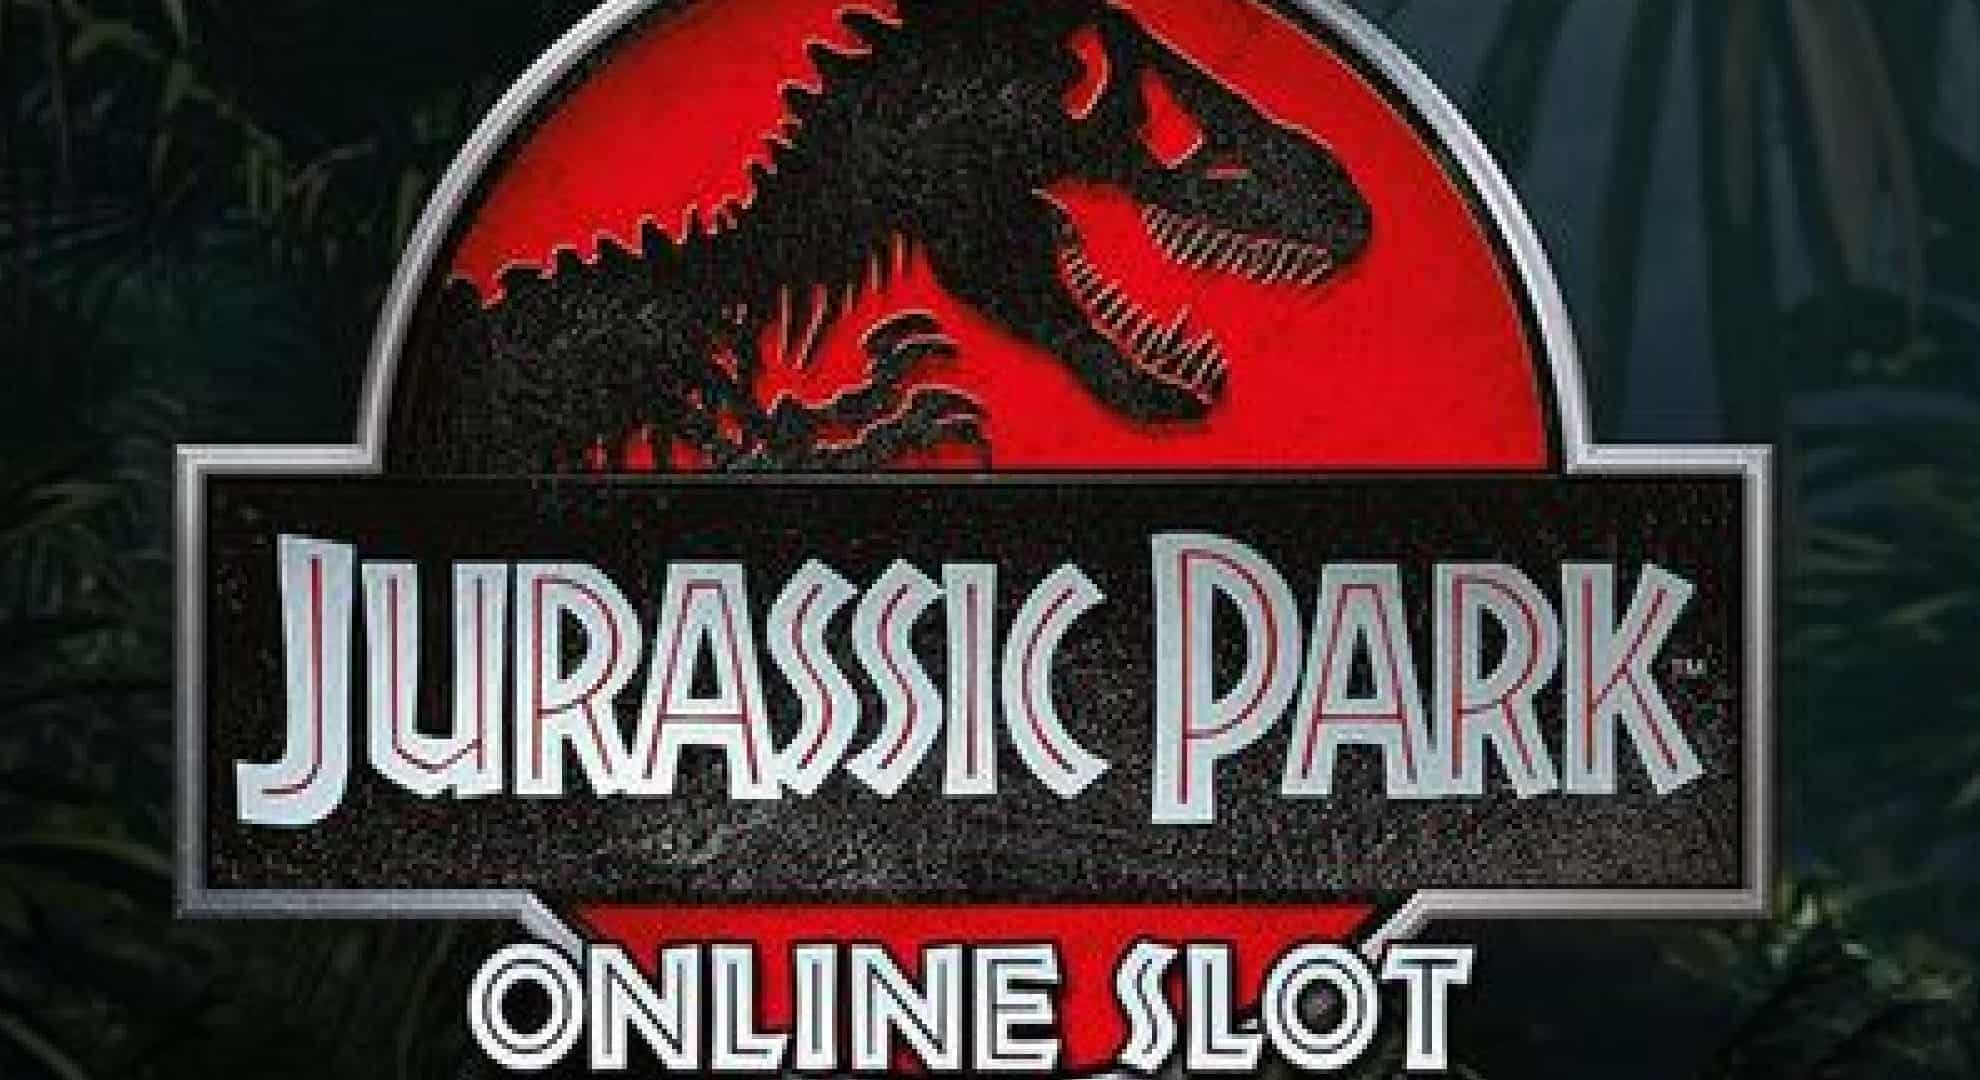 Jurassic Park bestcasino.ng